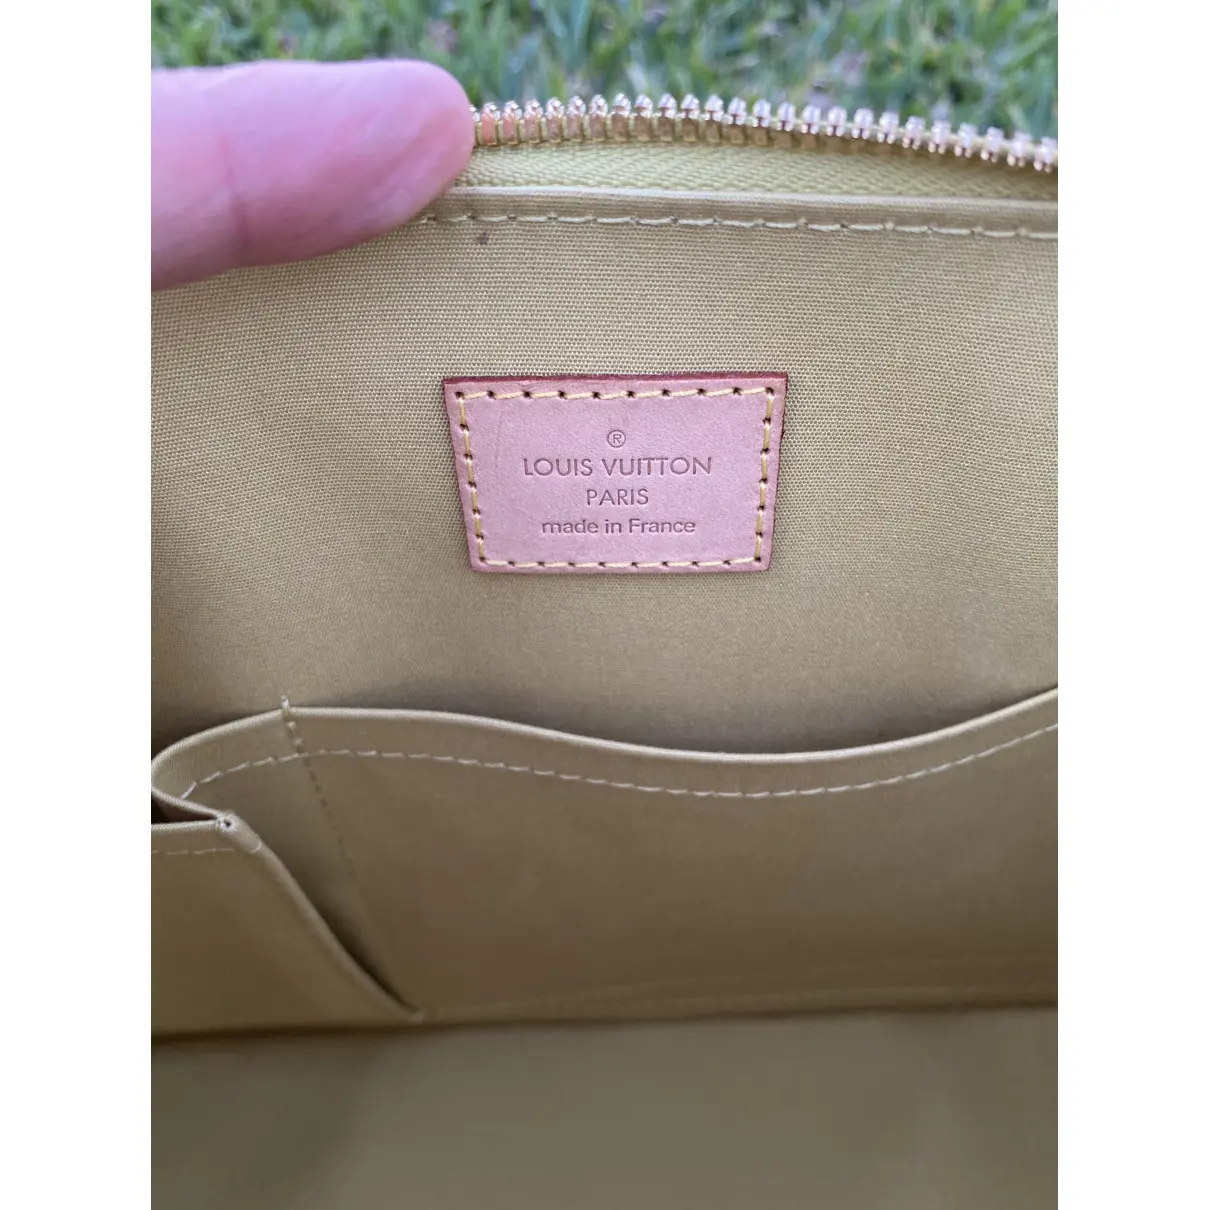 Buy Louis Vuitton Alma patent leather handbag online